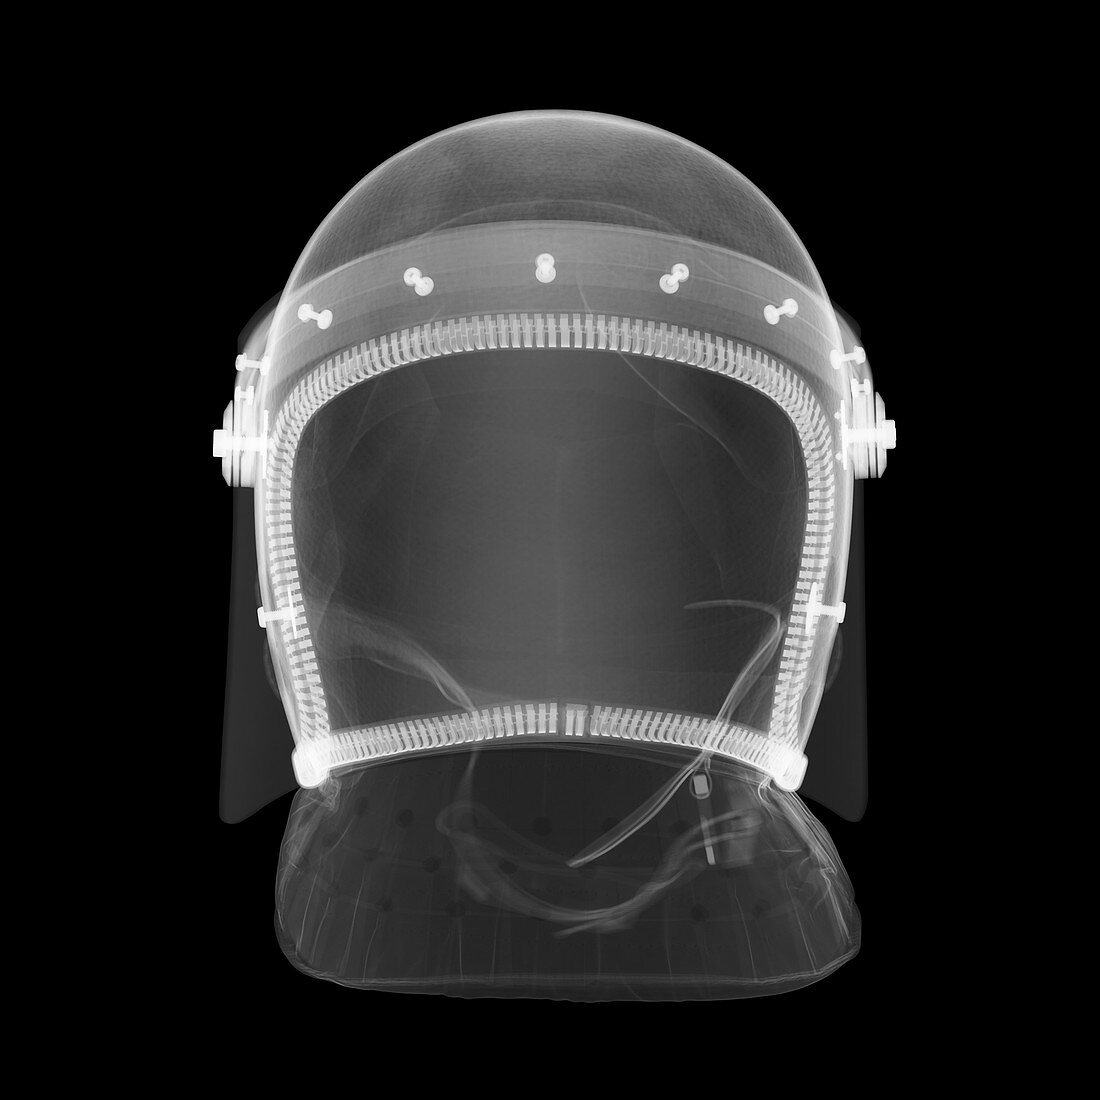 Police riot helmet, X-ray